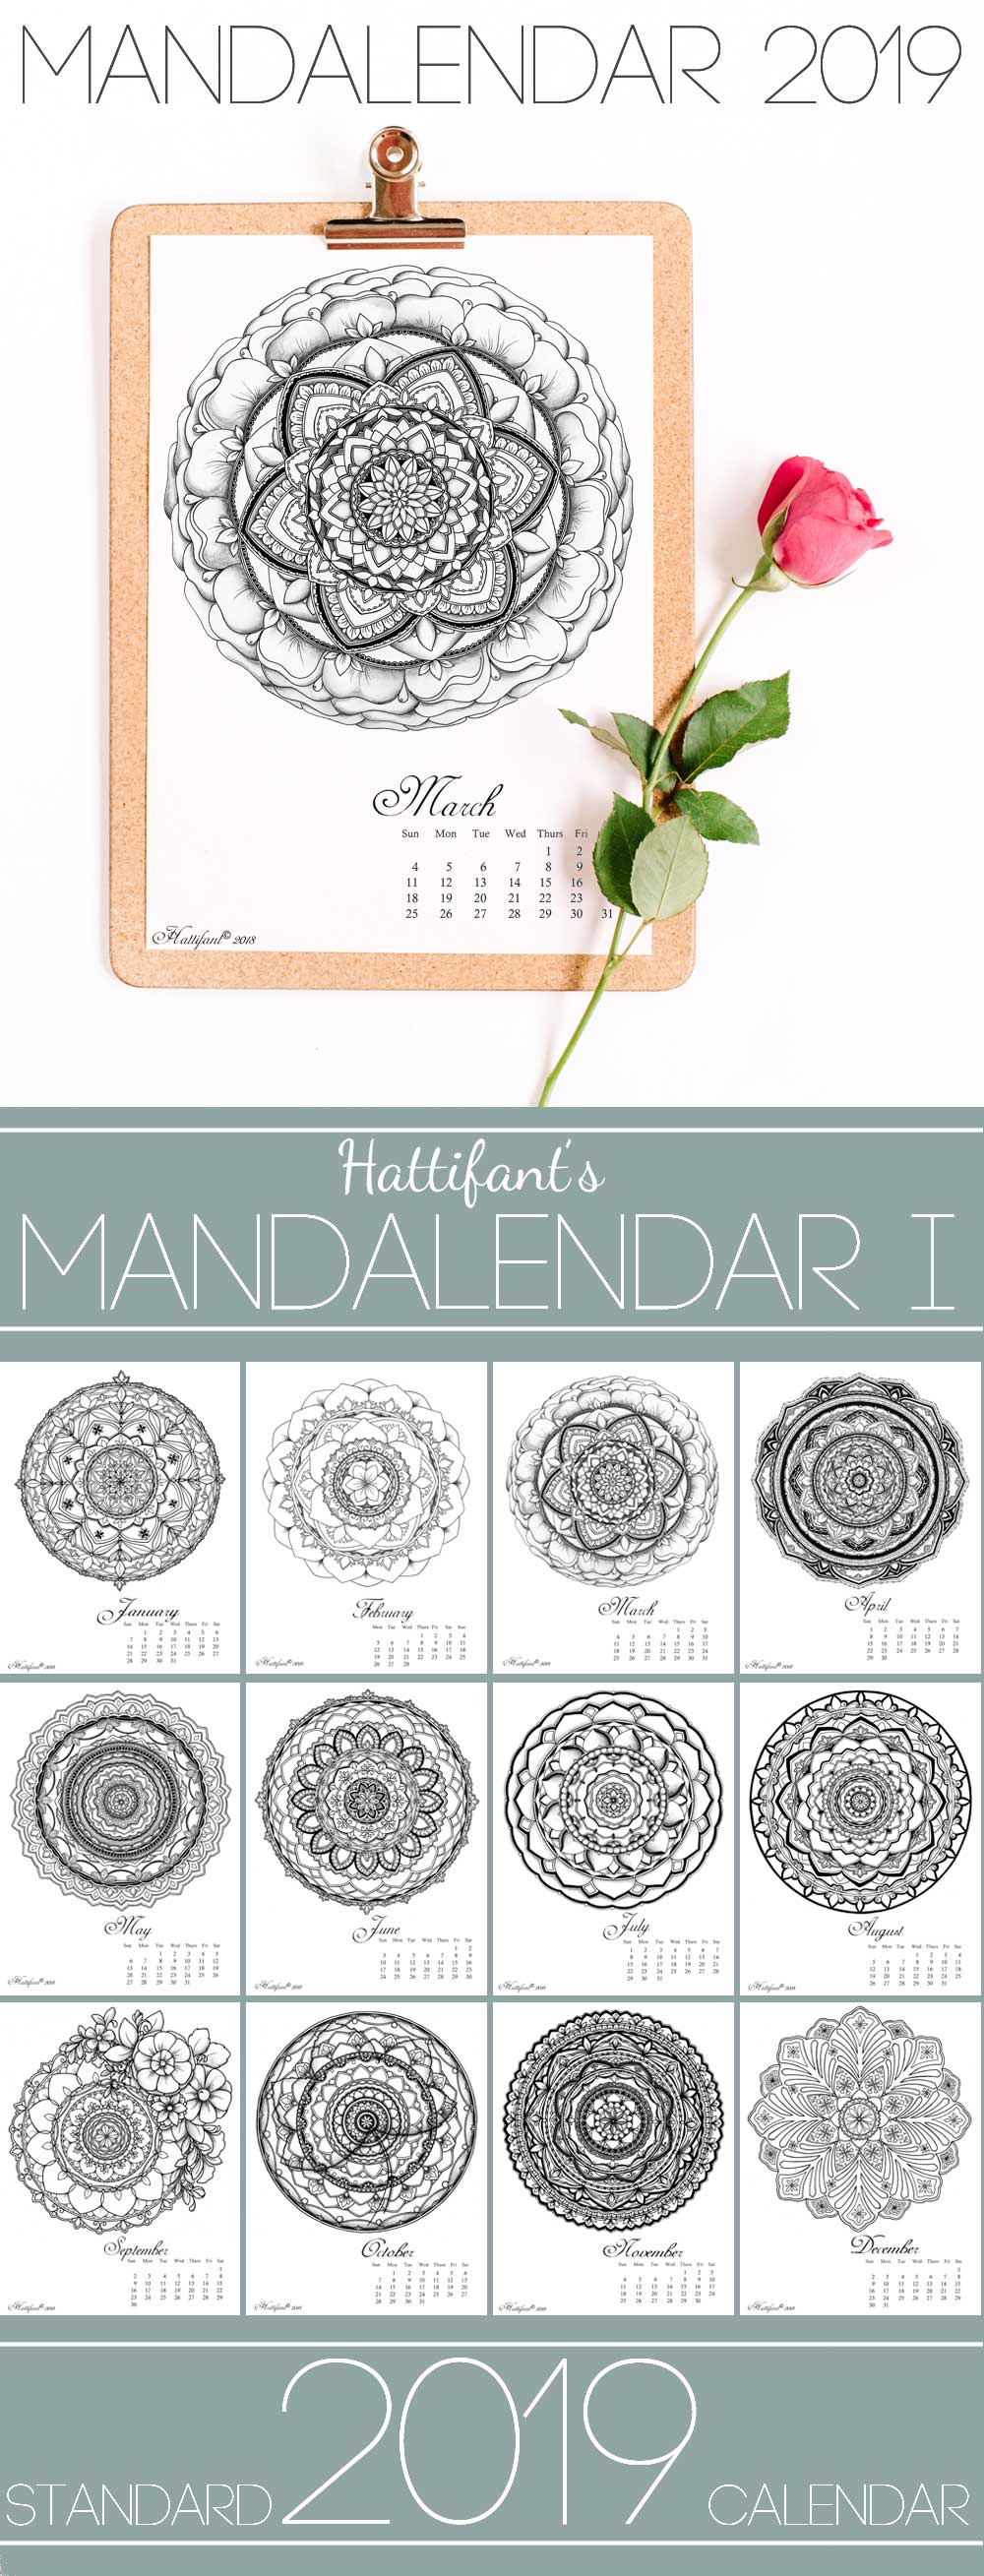 Hattifant's Mandalendar 2019 a Mandala Calendar to Color Standard 1